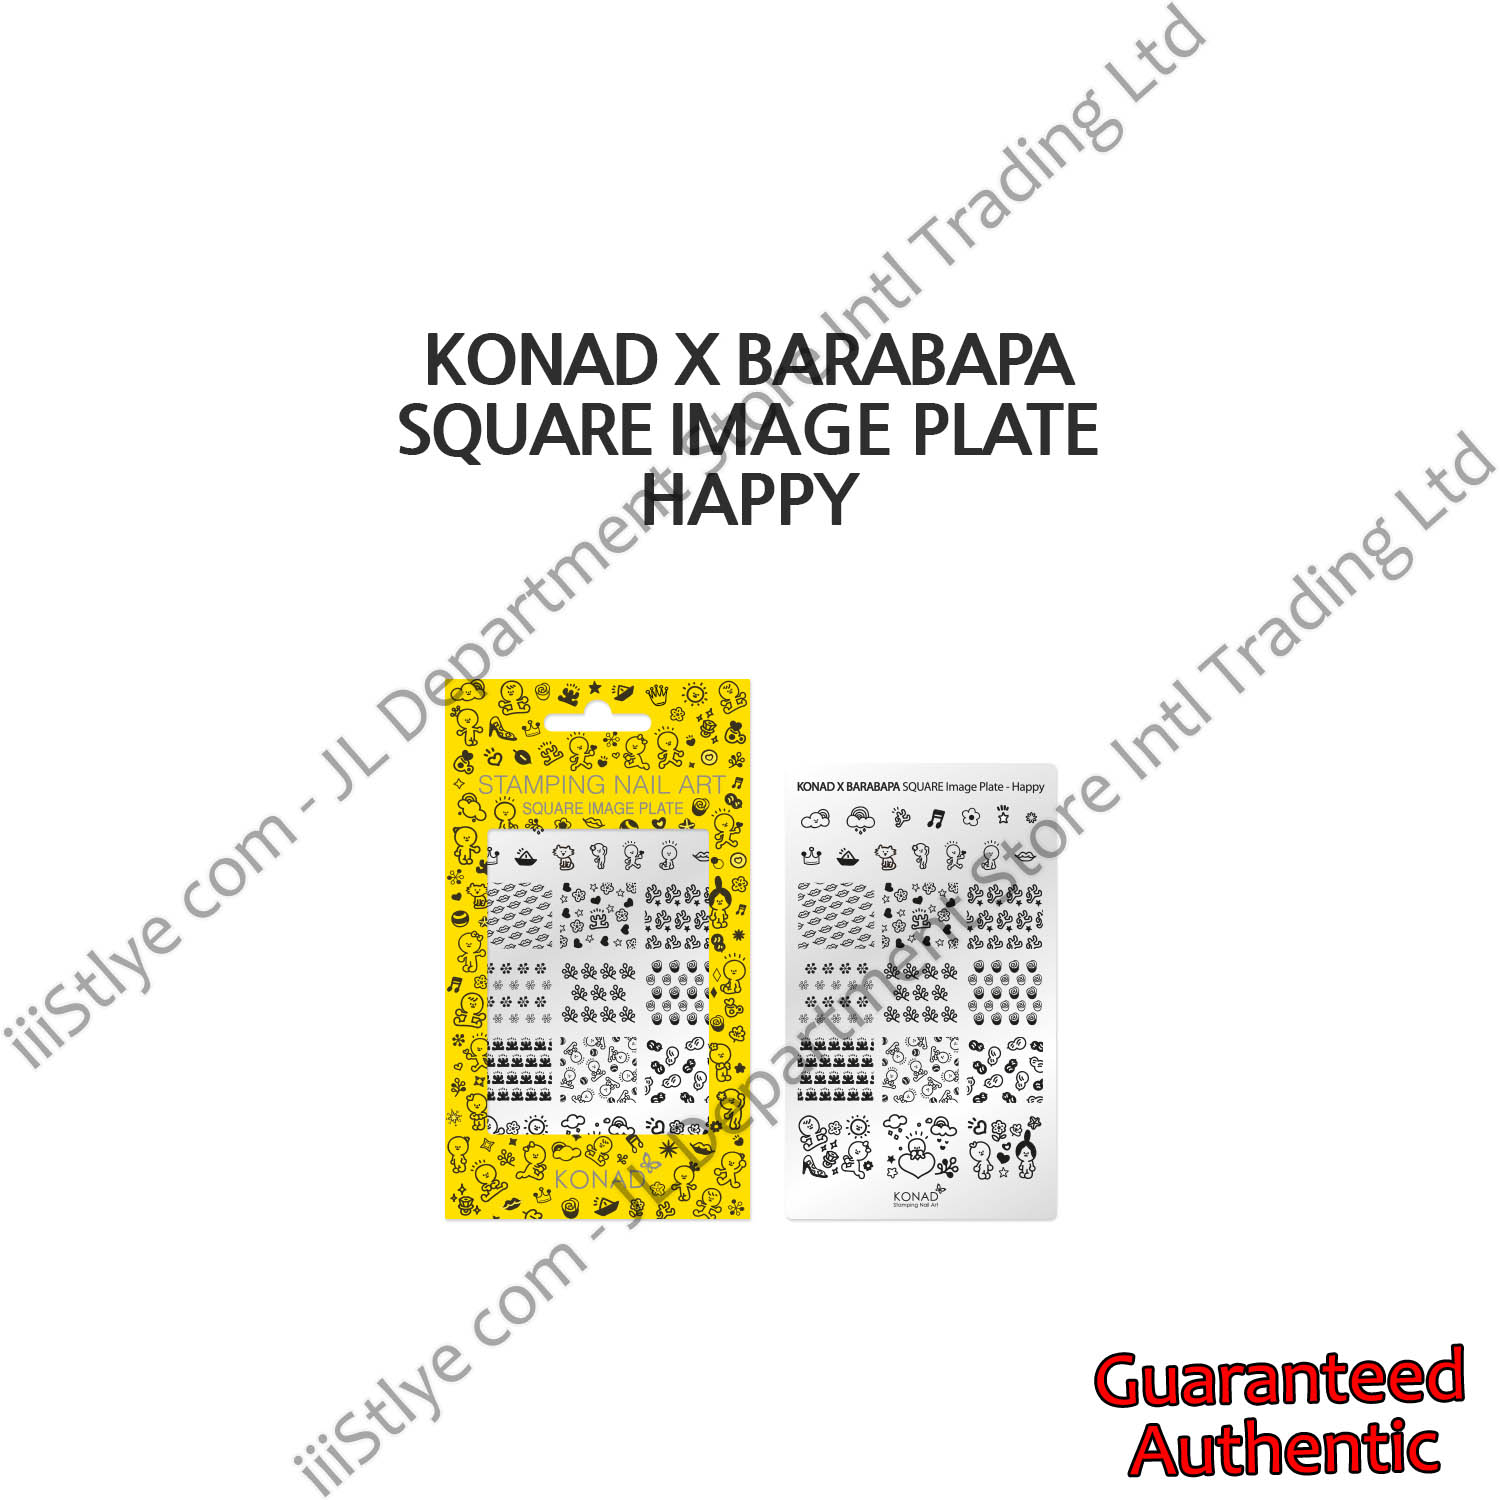 KonadXBarabapa square image plate Happy